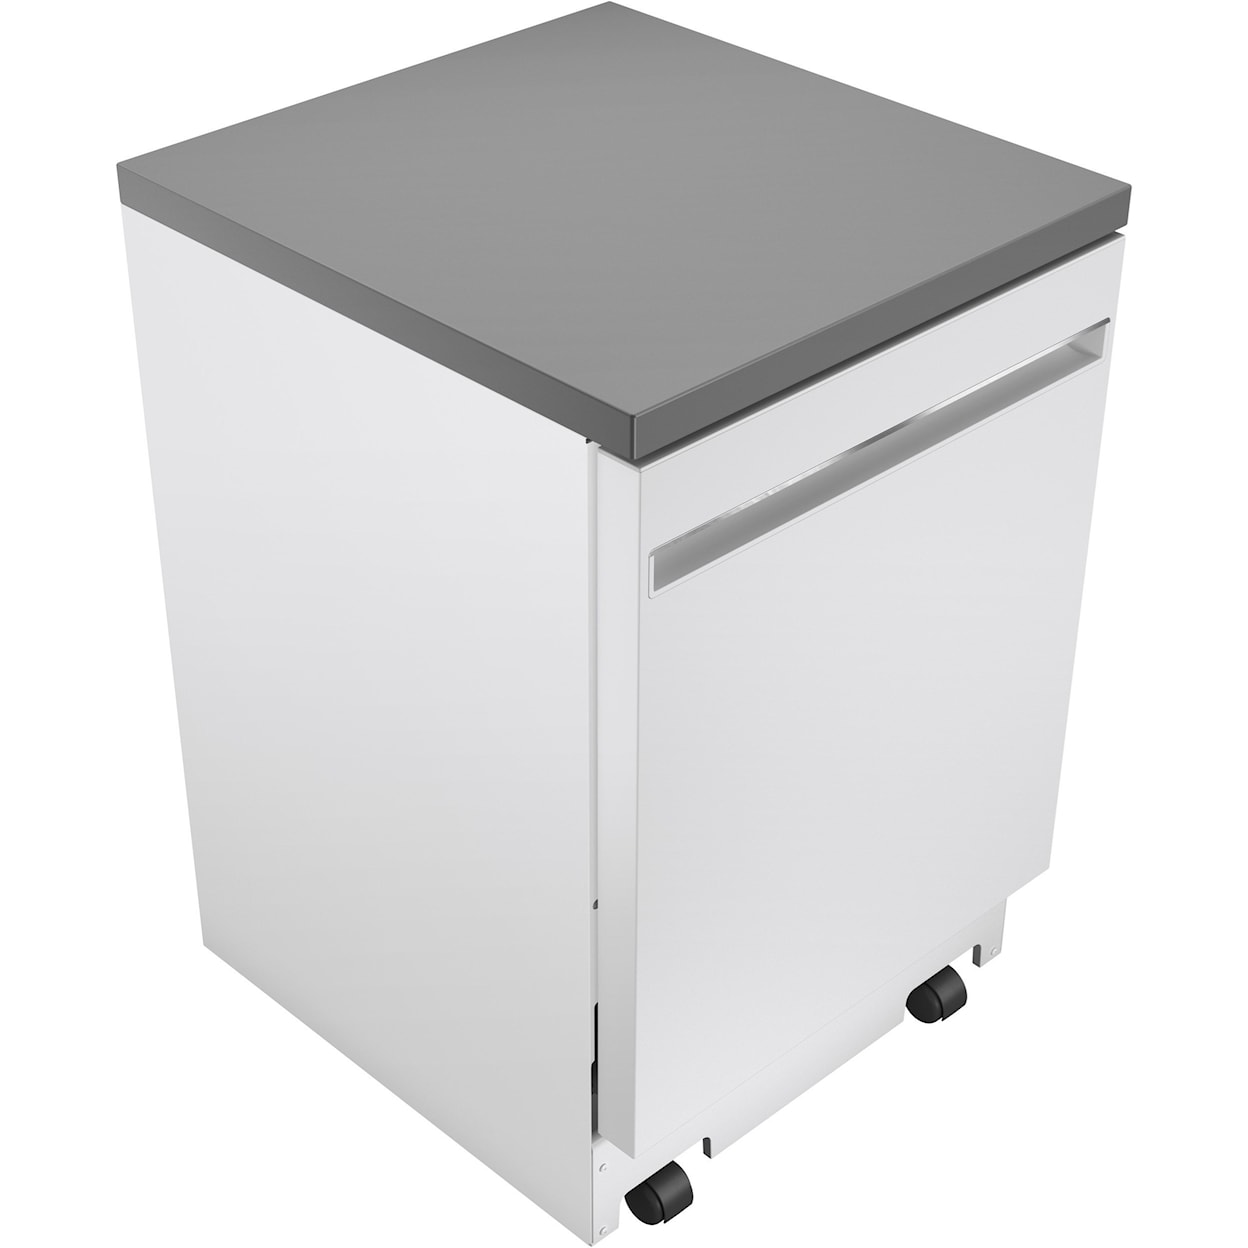 GE Appliances Dishwashers GE® 24" Portable Dishwasher